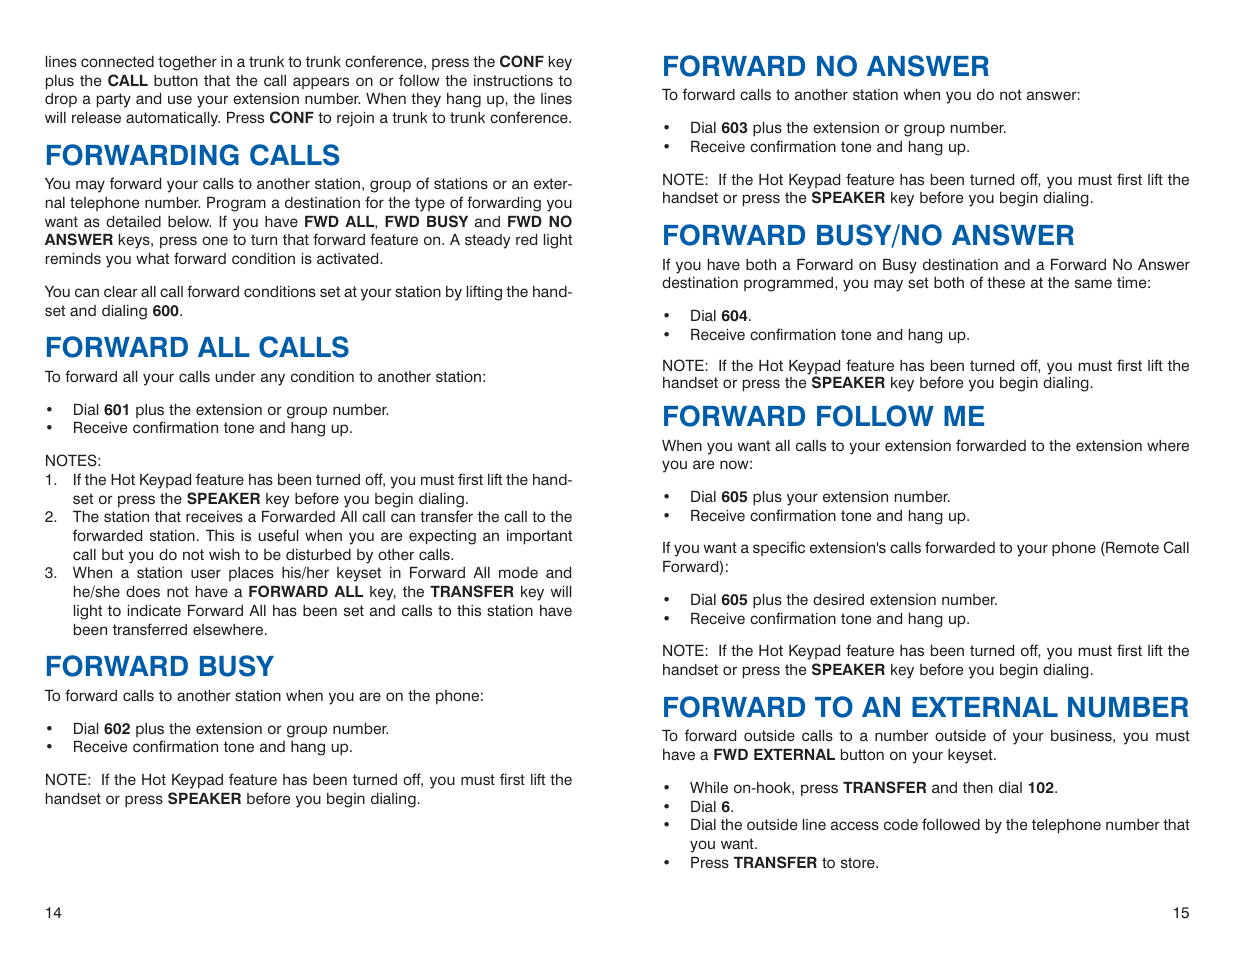 Forward no answer, Forward busy/no answer, Forward follow me | Forward to an external number, Forwarding calls, Forward all calls, Forward busy | Sharp DS 24D User Manual | Page 10 / 24